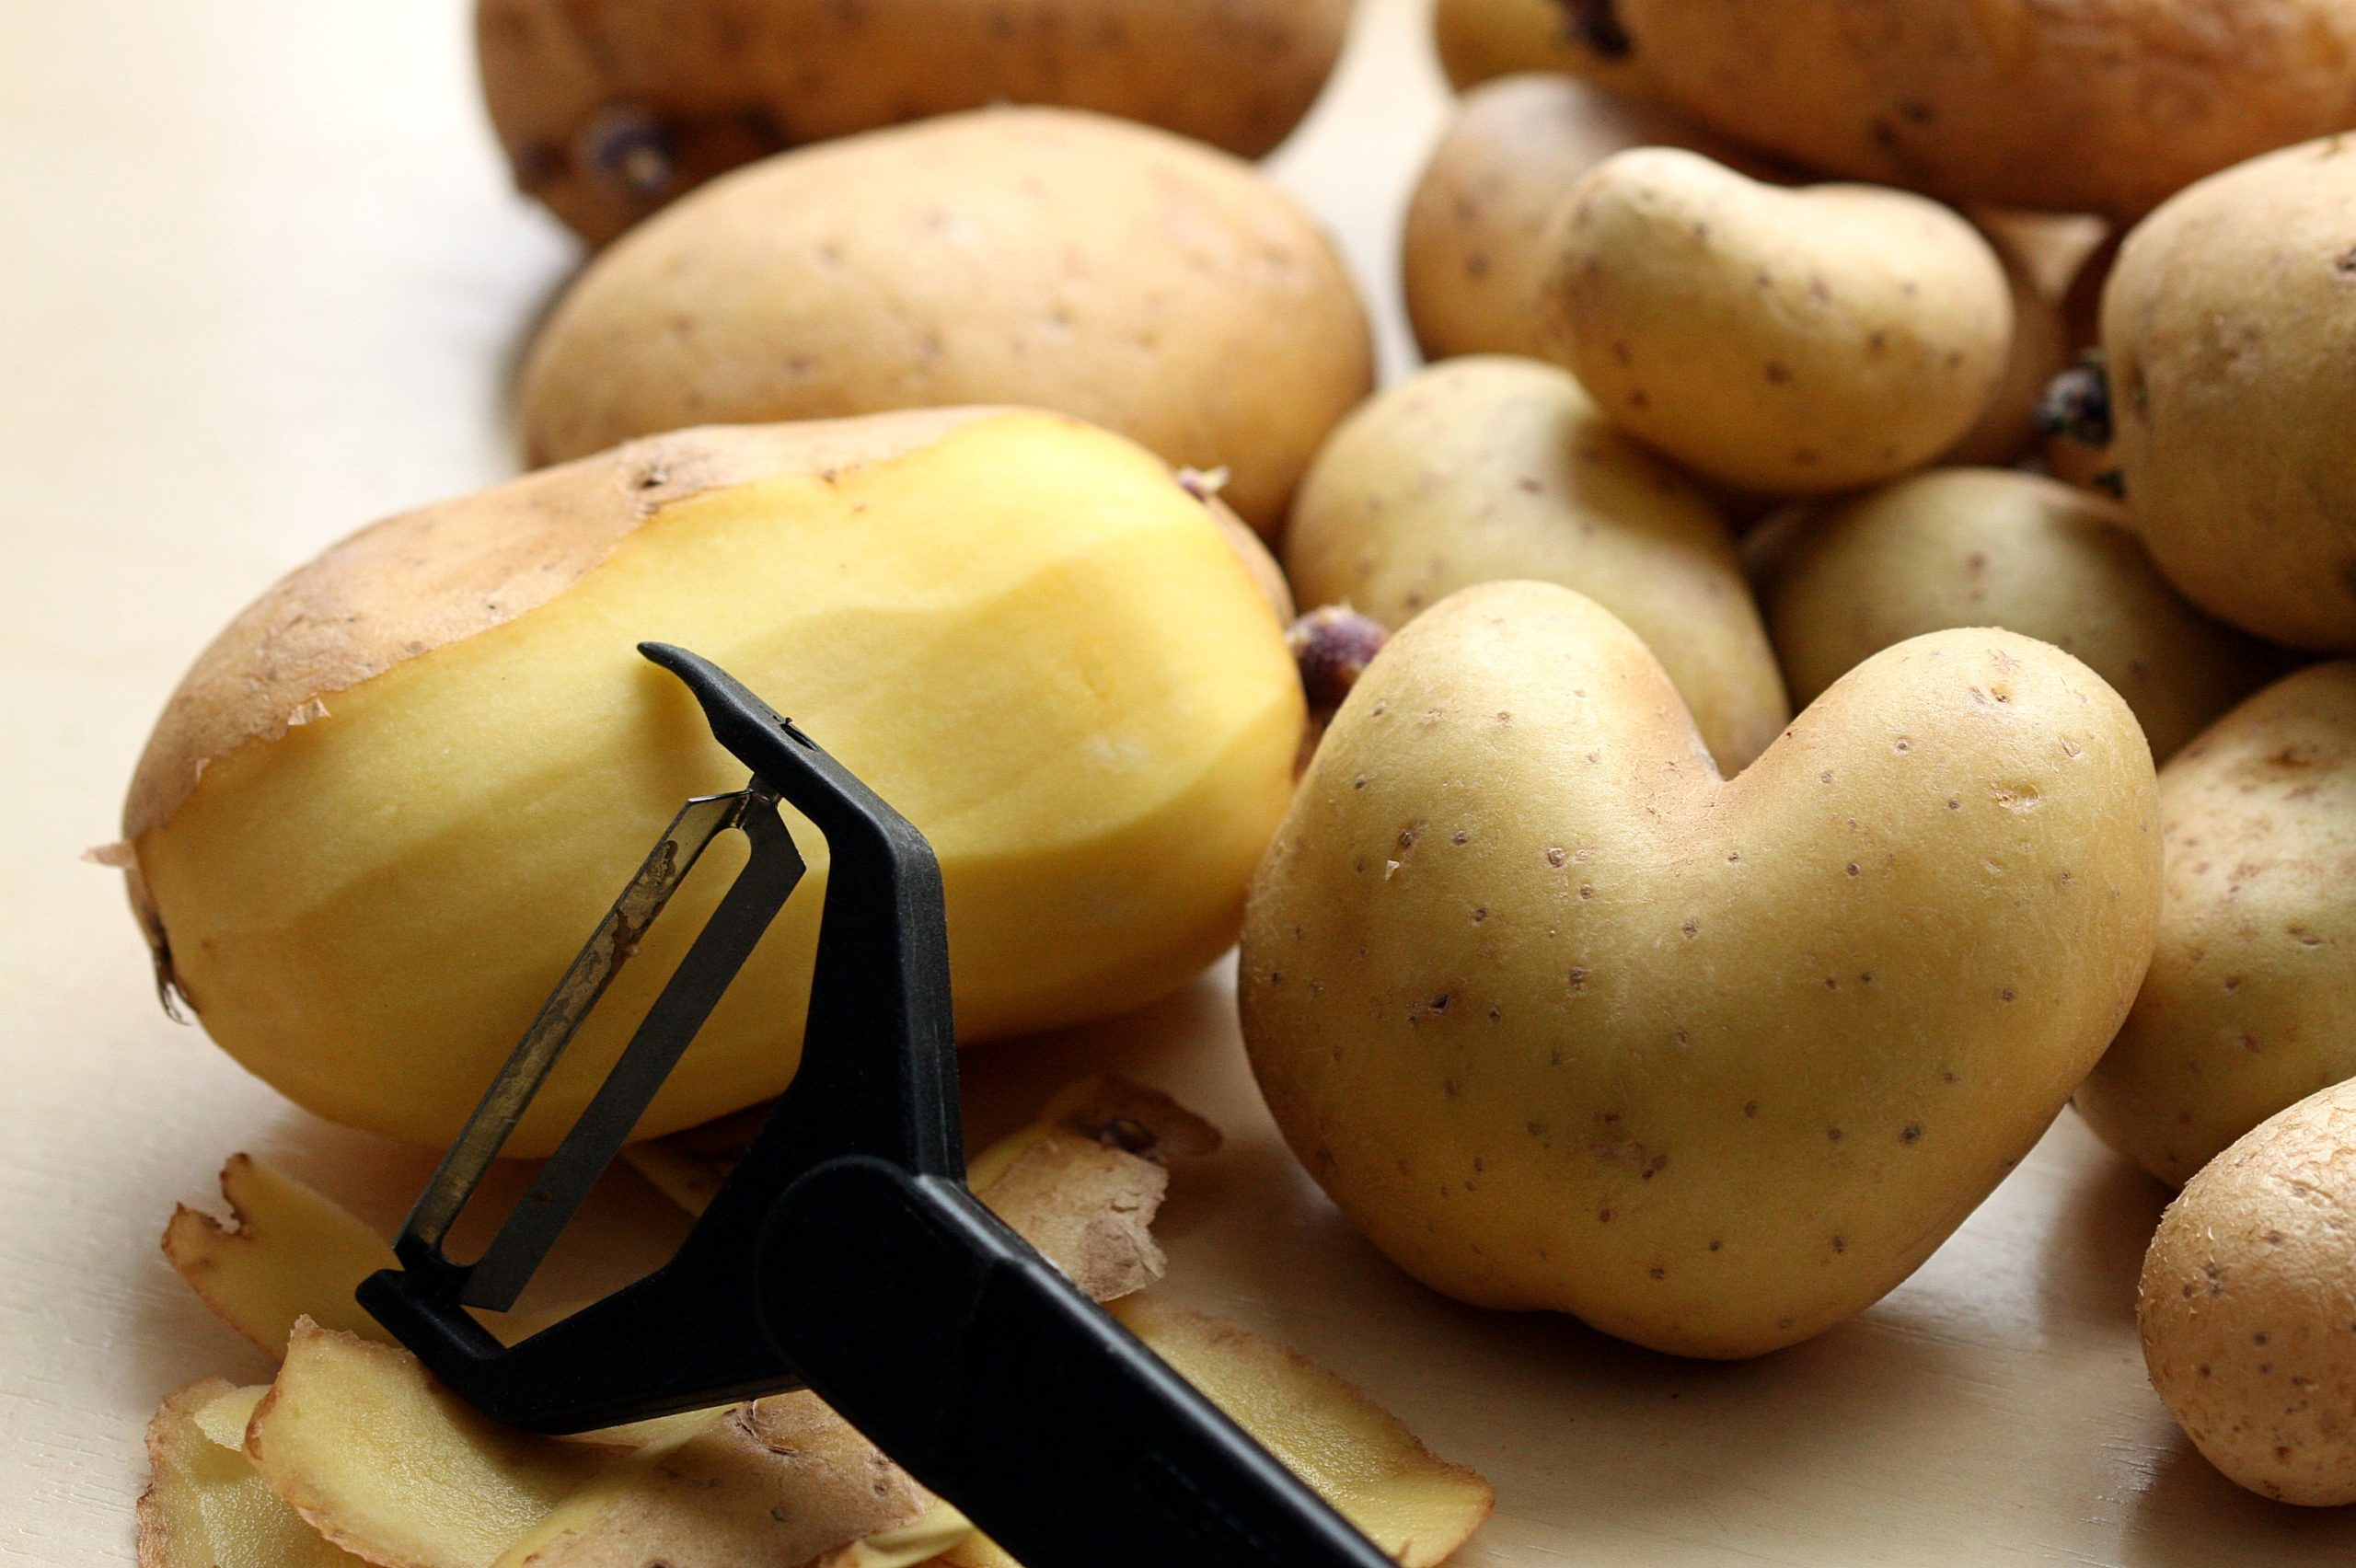 An Image of potatoes with a peeler